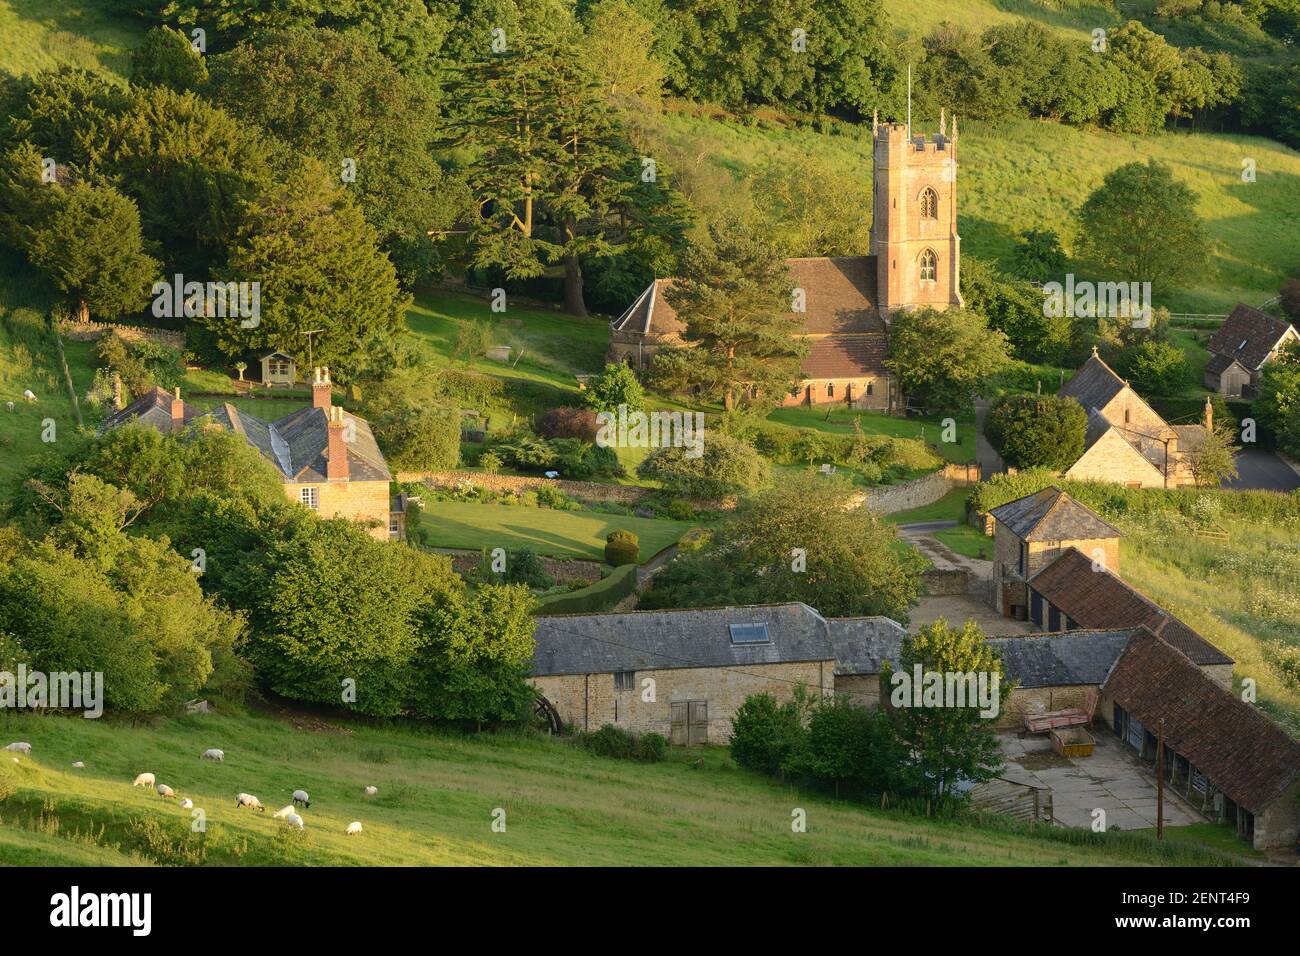 View of the quaint, unspoilt village of Corton Denham in Somerset, UK. Stock Photo